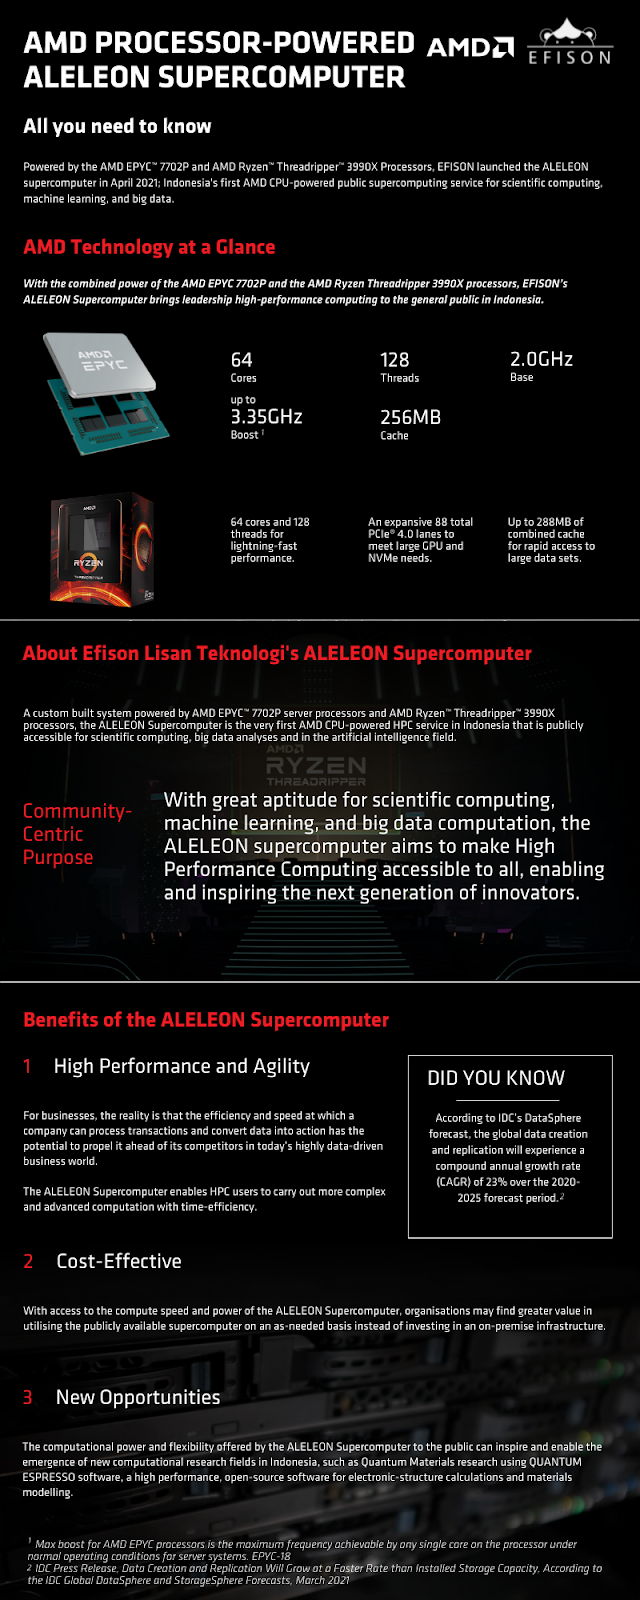 AMD Processor-Powered ALELEON Supercomputer Offers High Performance Computing